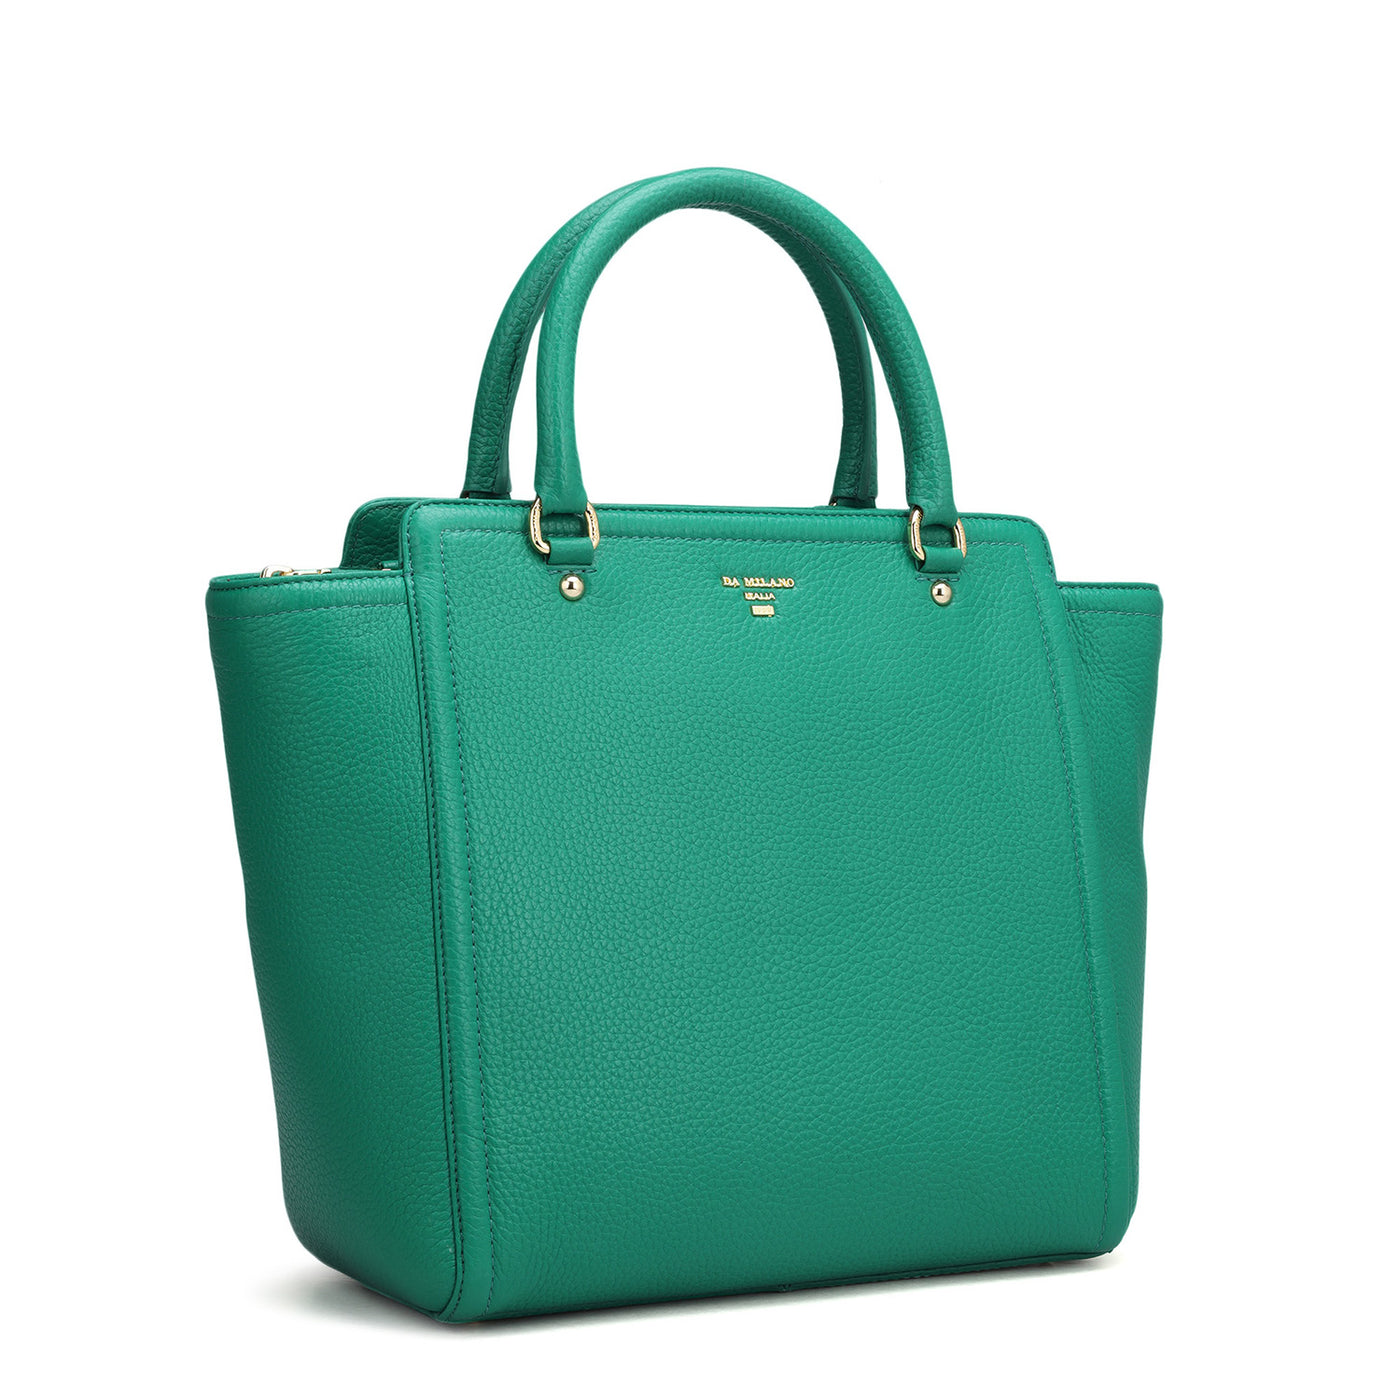 Medium Wax Leather Satchel - Emerald Green